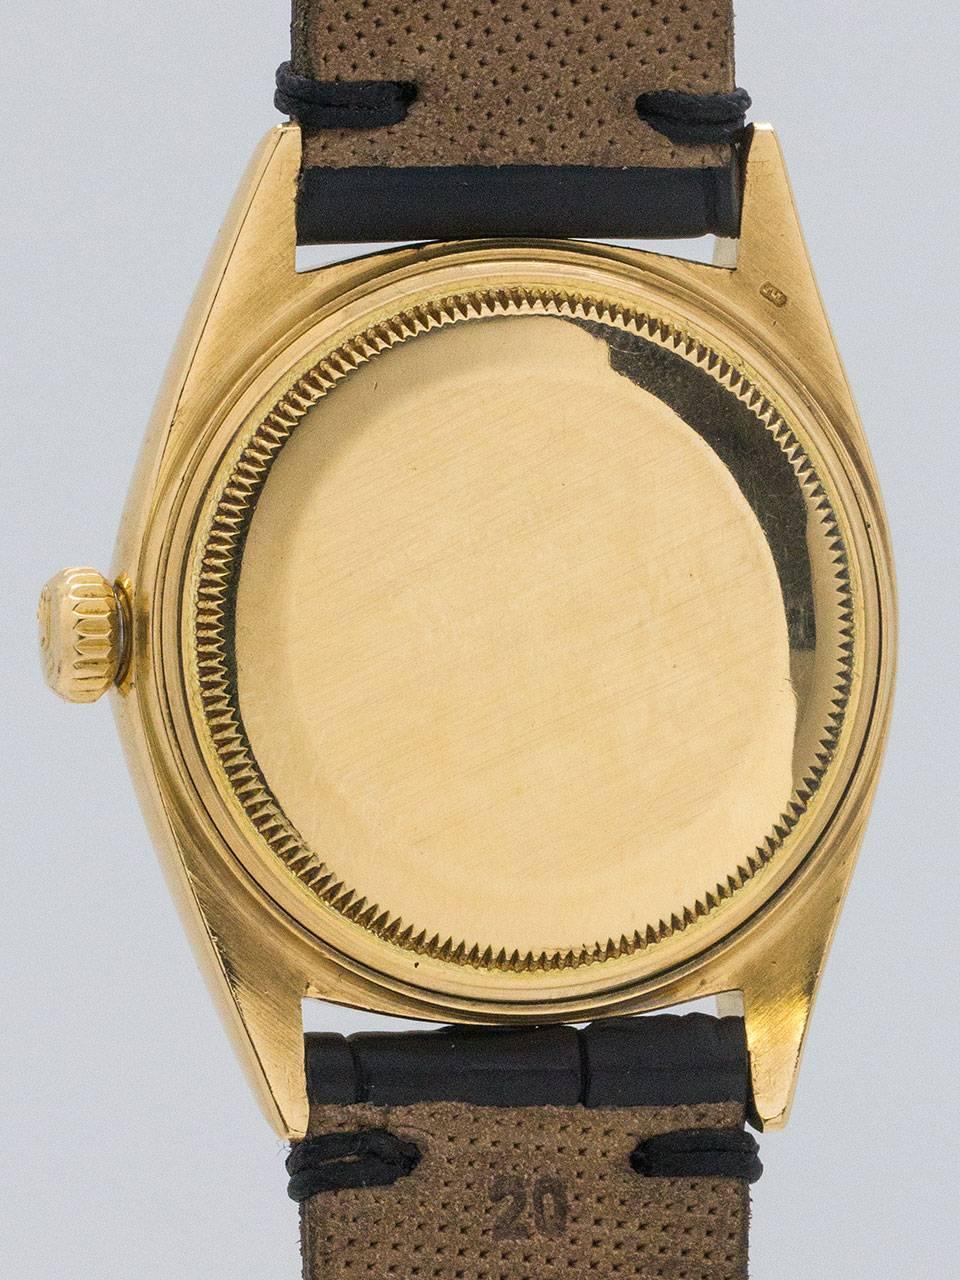 Men's Rolex Yellow Gold Day Date Wristwatch ref 1803 circa 1968